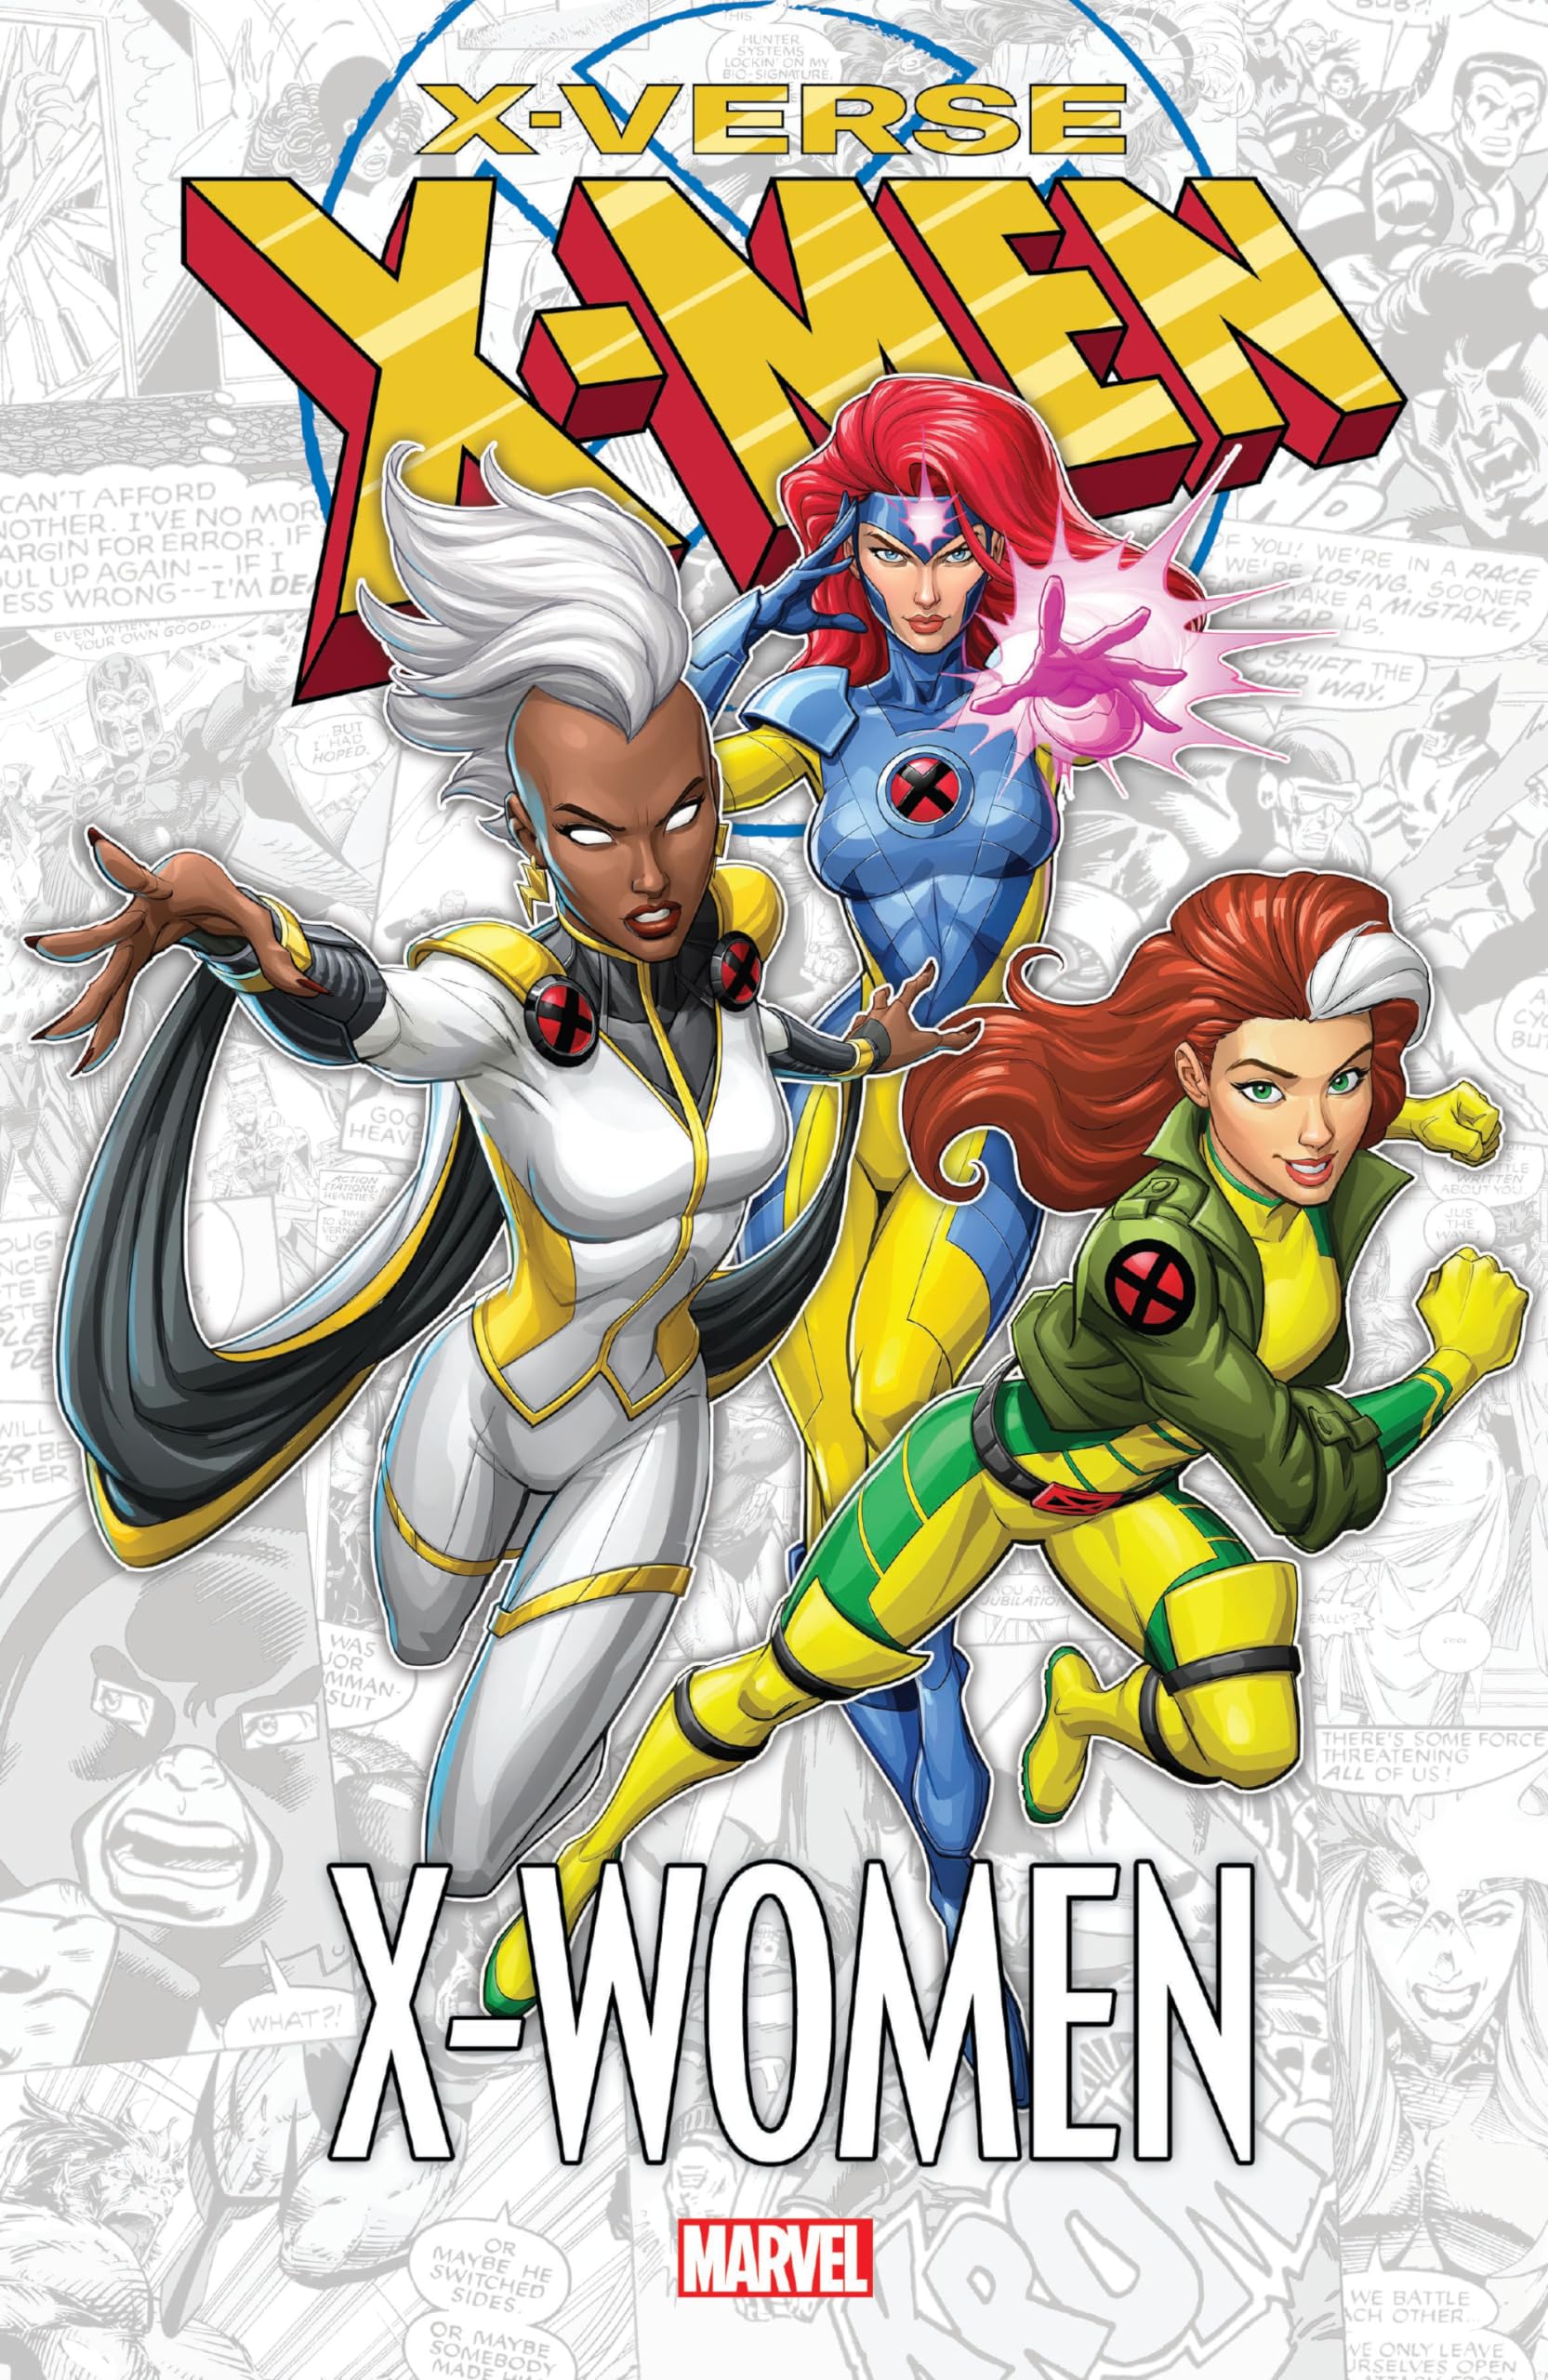 X-Men: X-Verse - X-Women Vol 1 1 | Marvel Database | Fandom